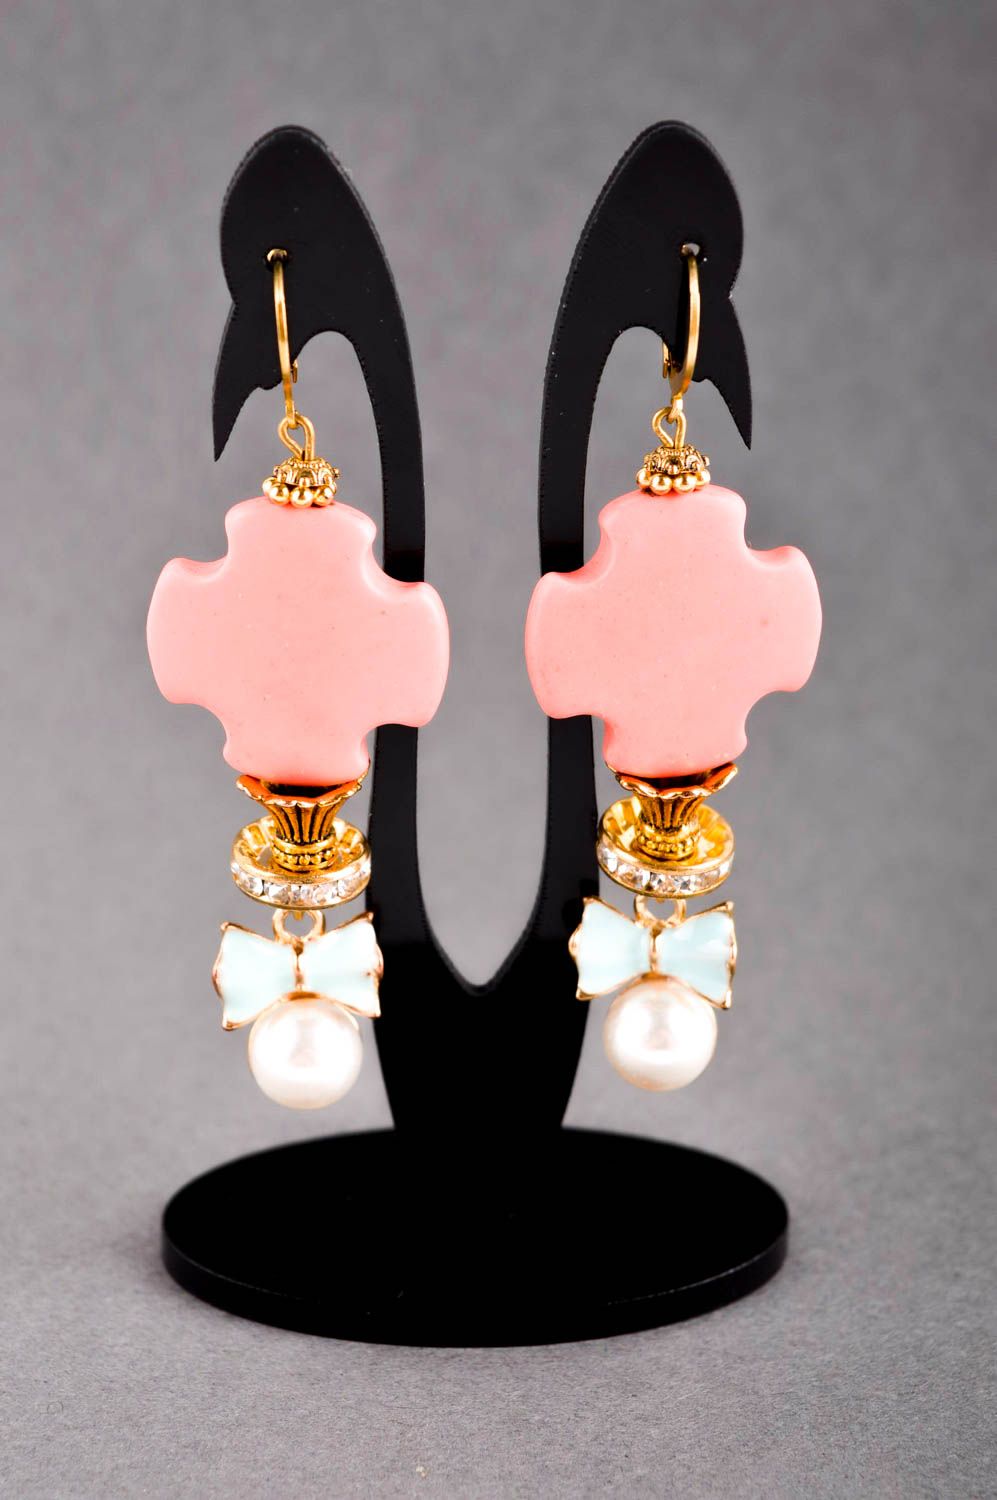 Handmade earrings designer earrings with charms pearl earrings for women photo 1